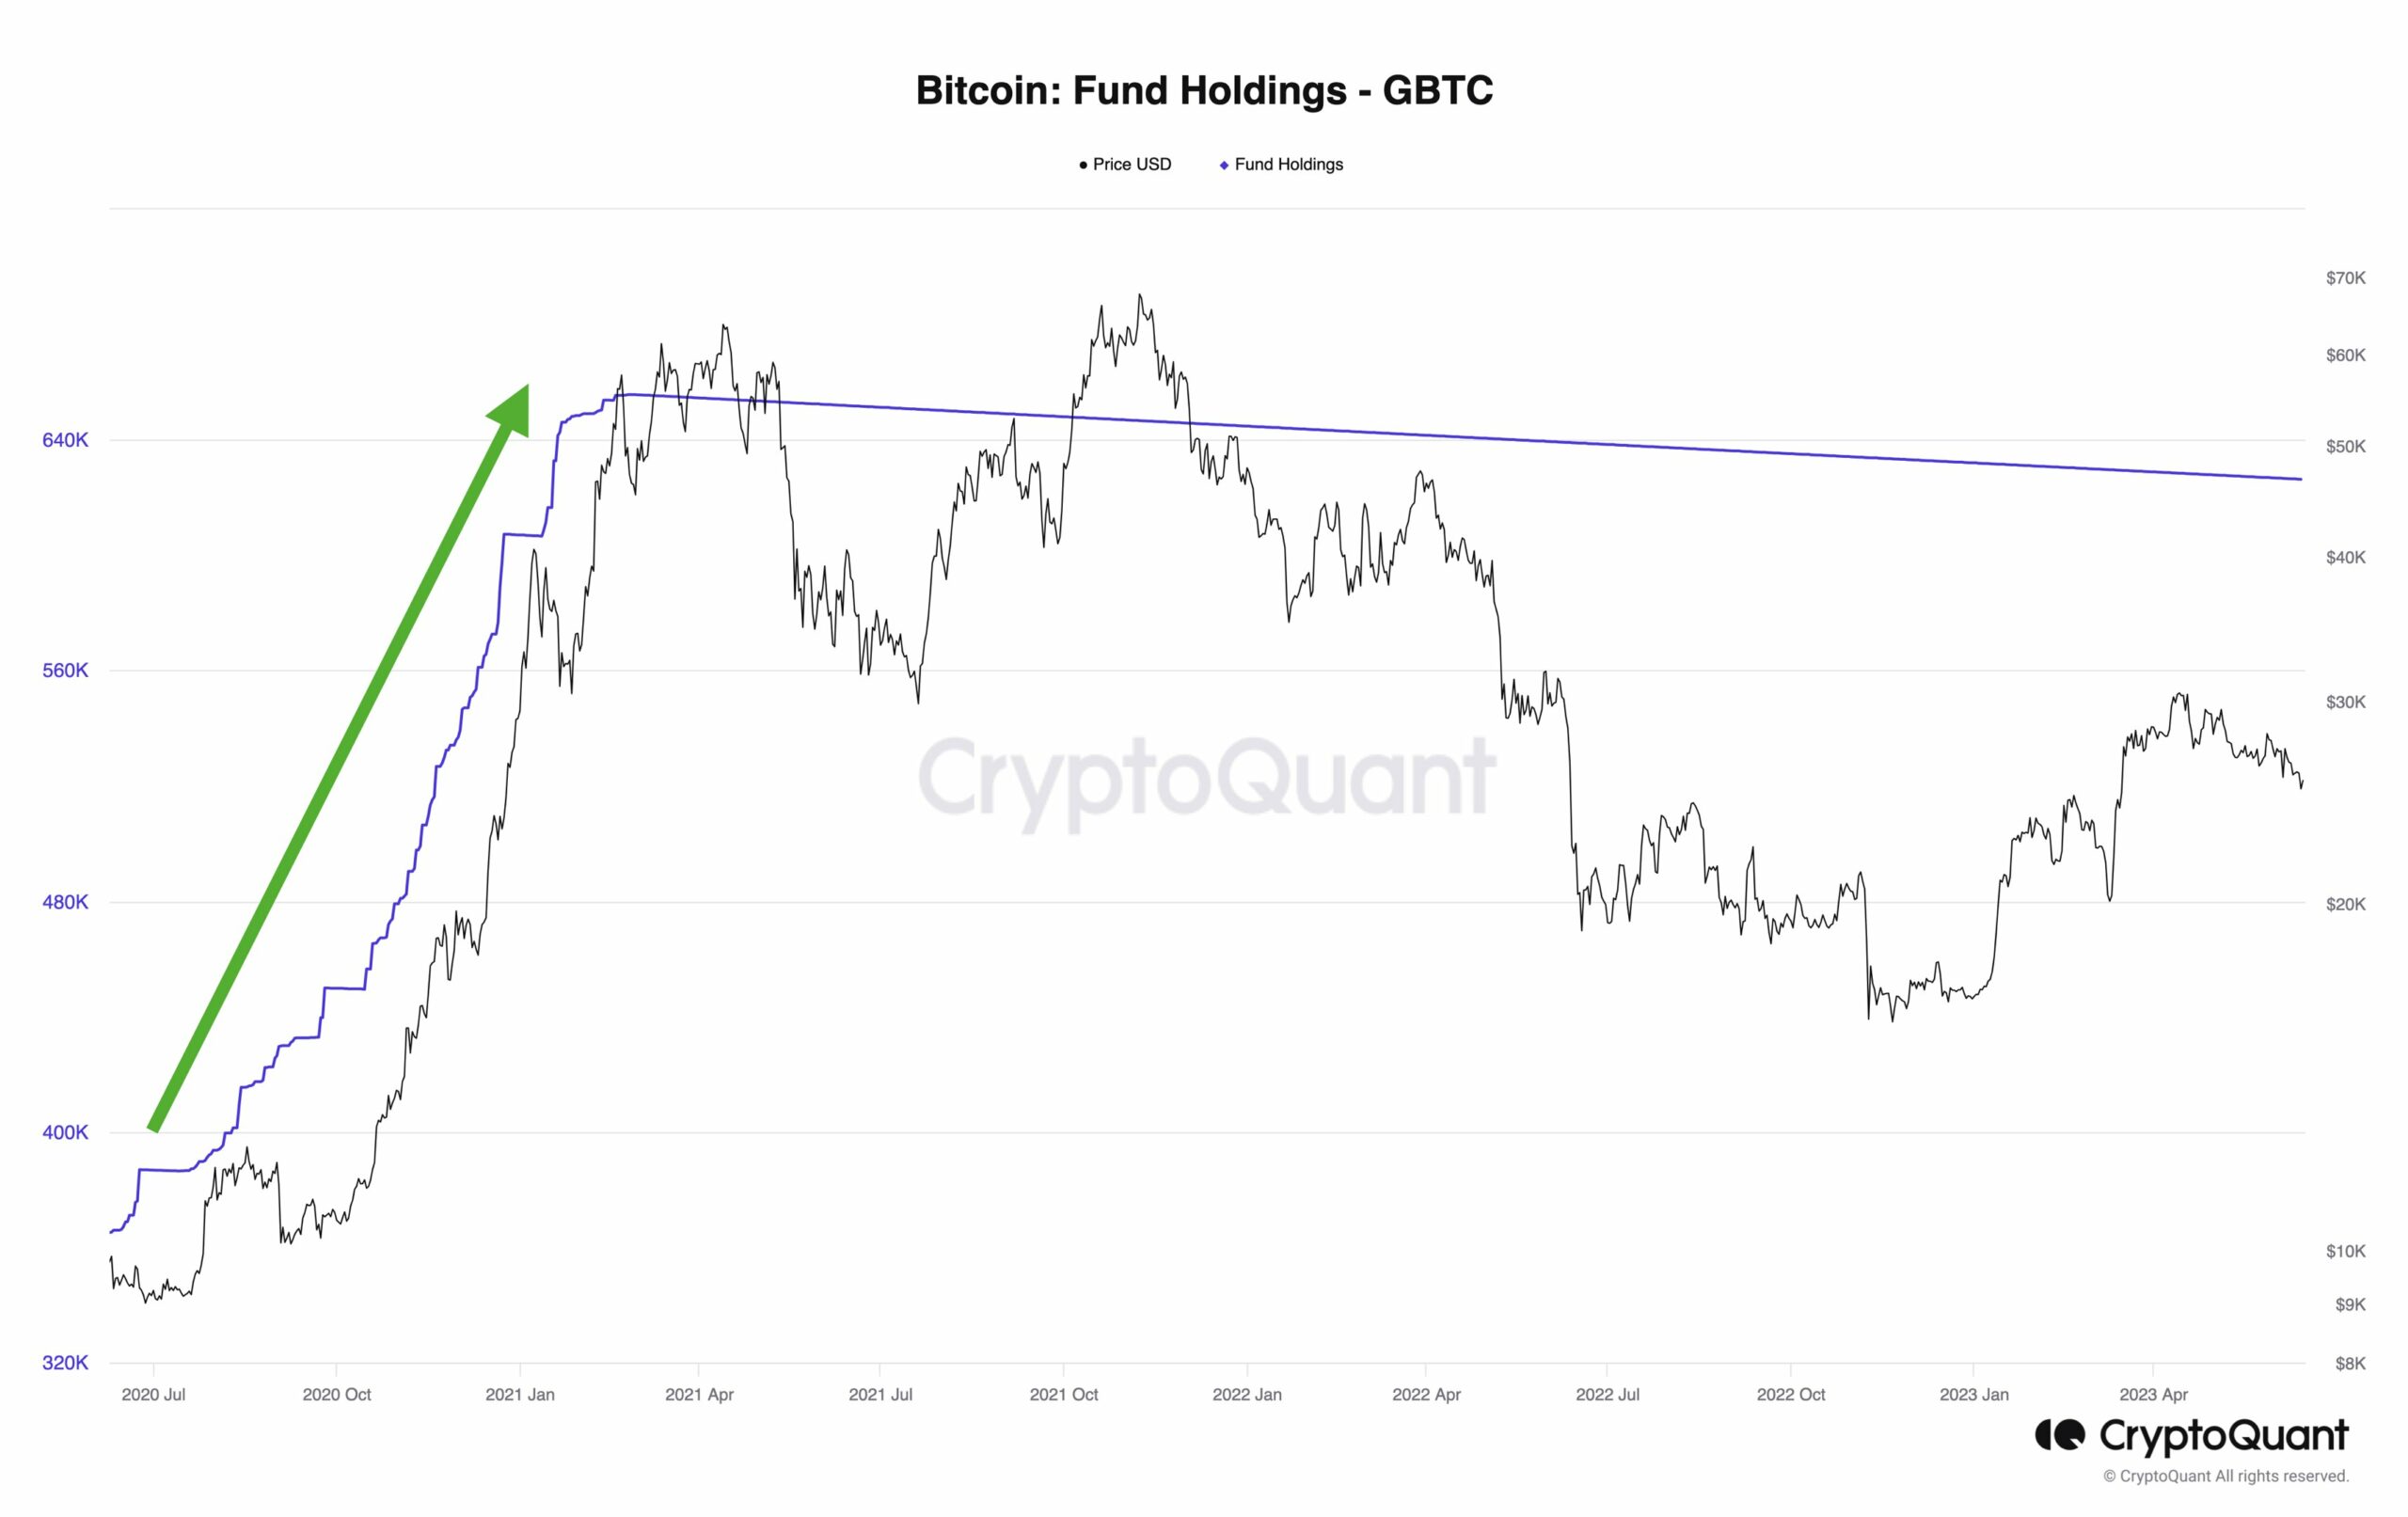 Bitcoin fund holdings GBTC vs. BTC price